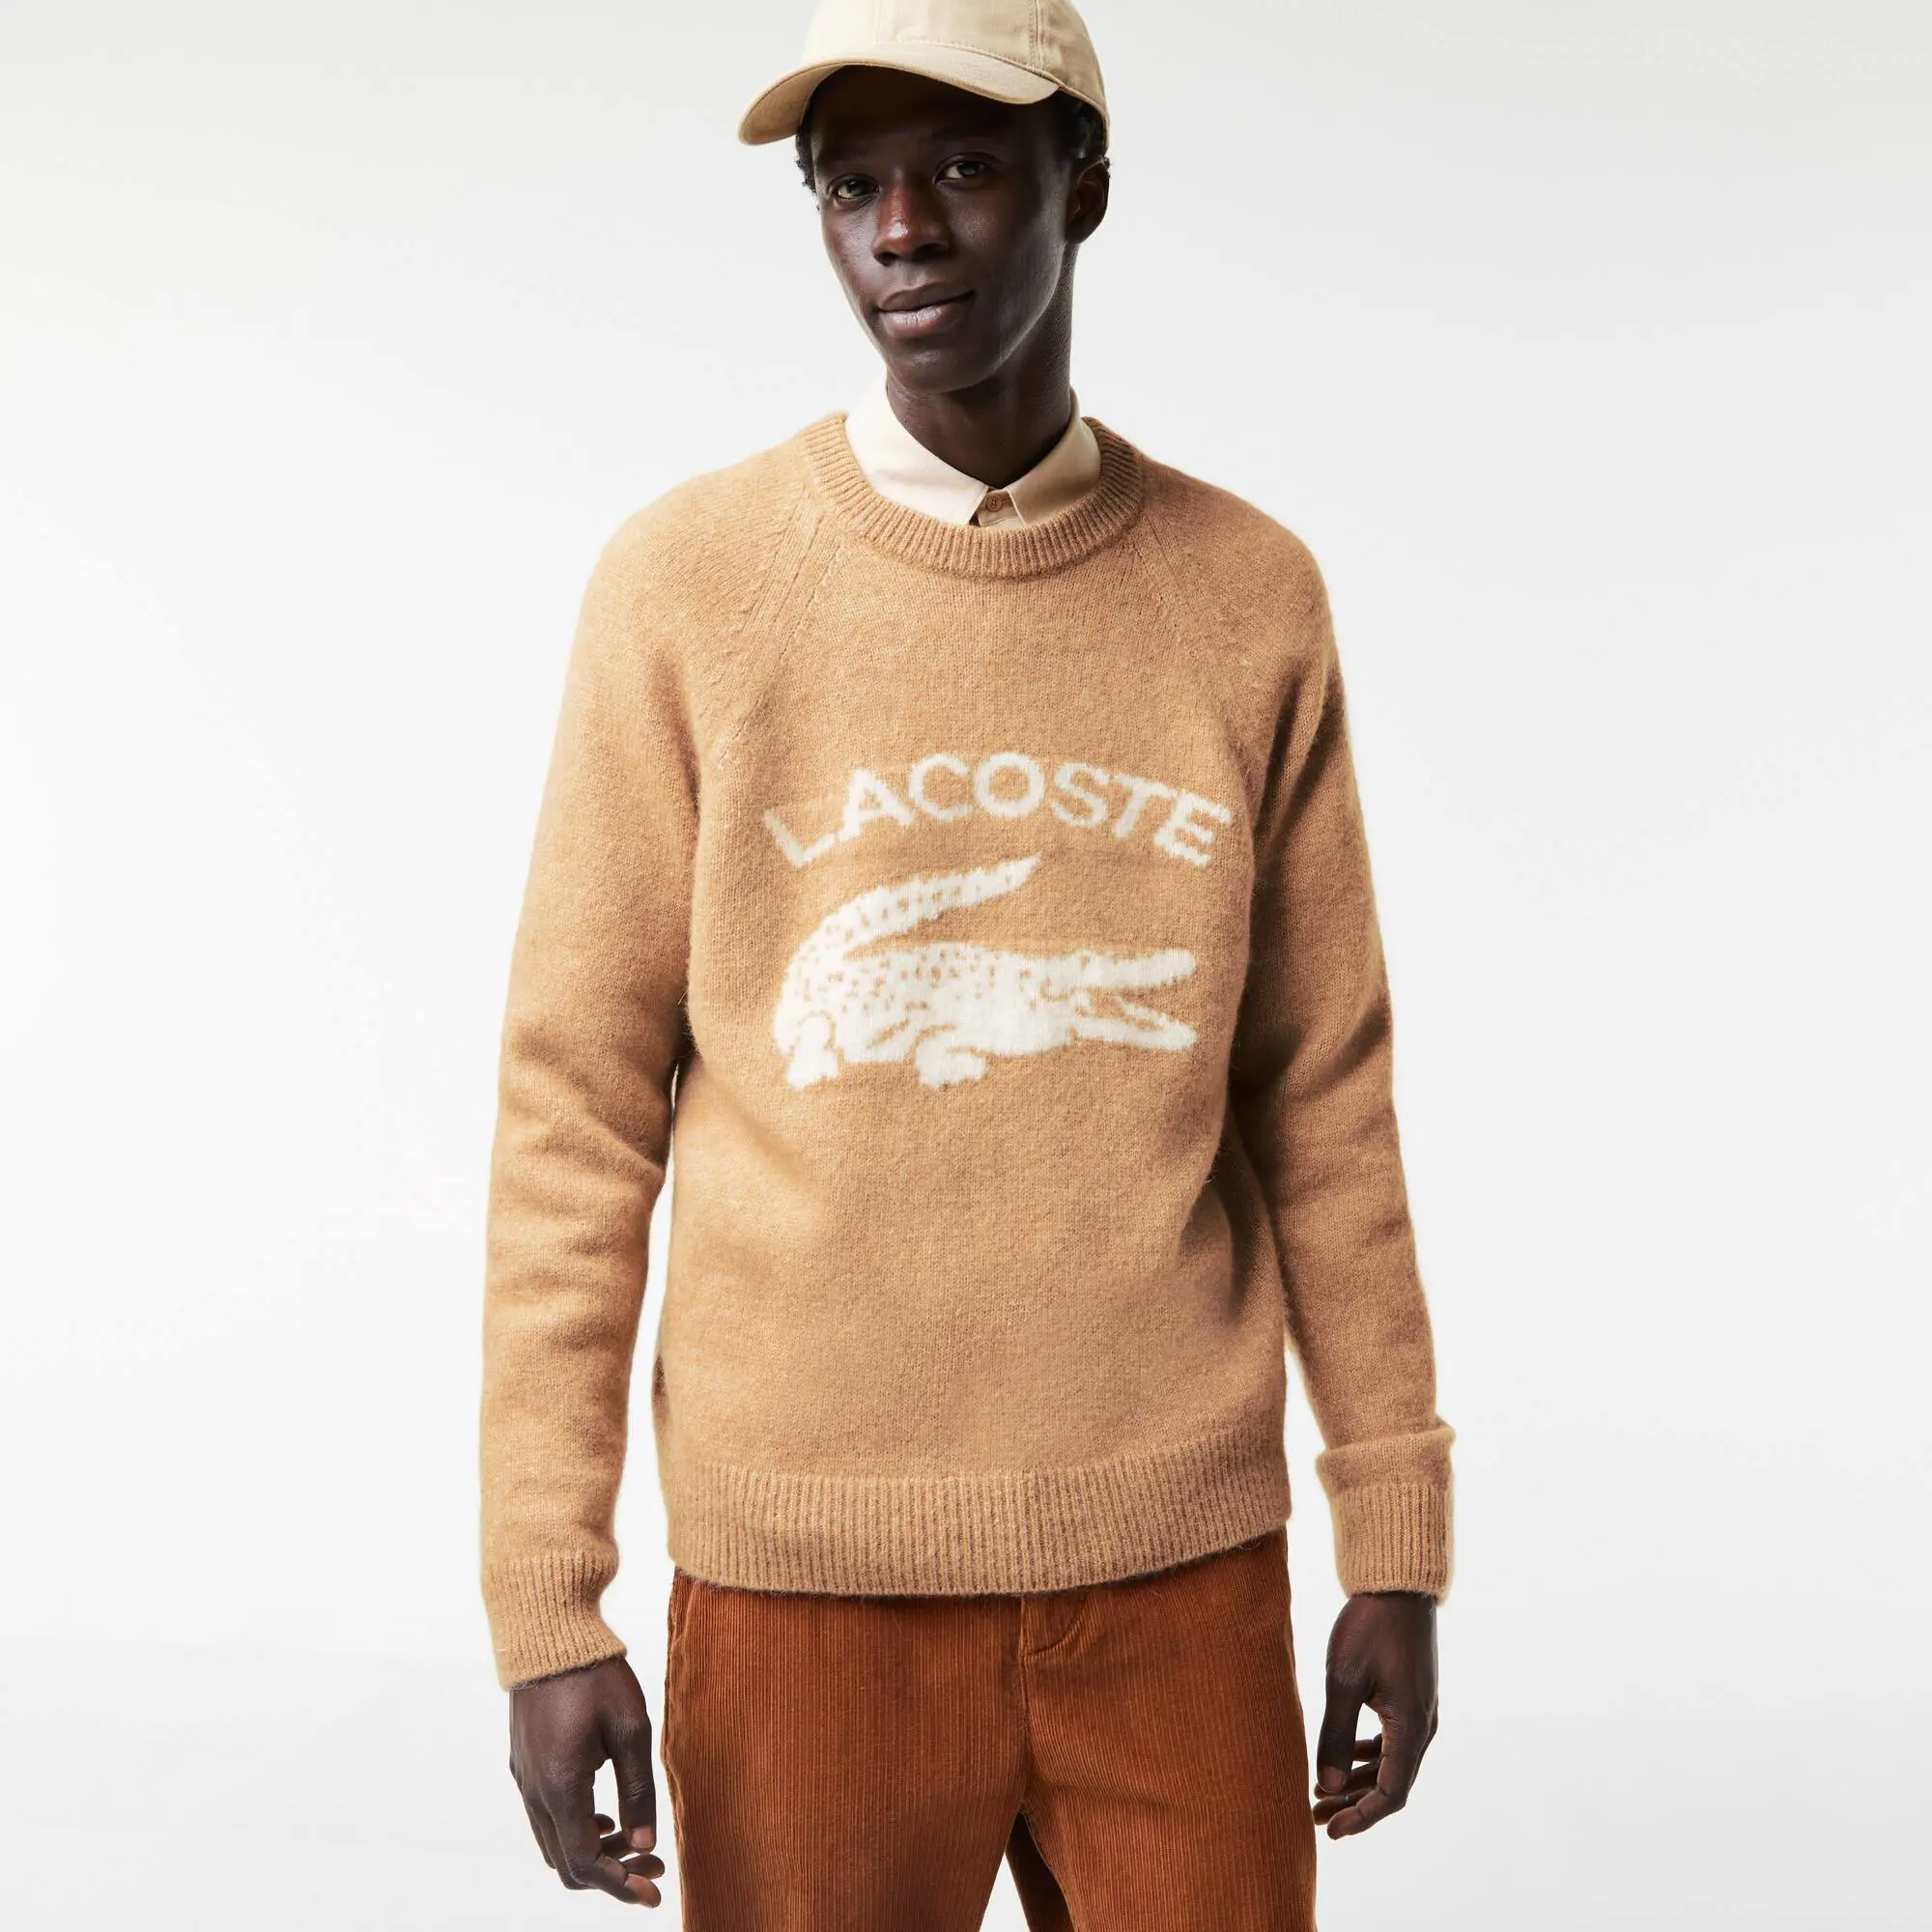 Lacoste Men's Branded Contrast Crocodile Blend Alpaca Sweater. 1